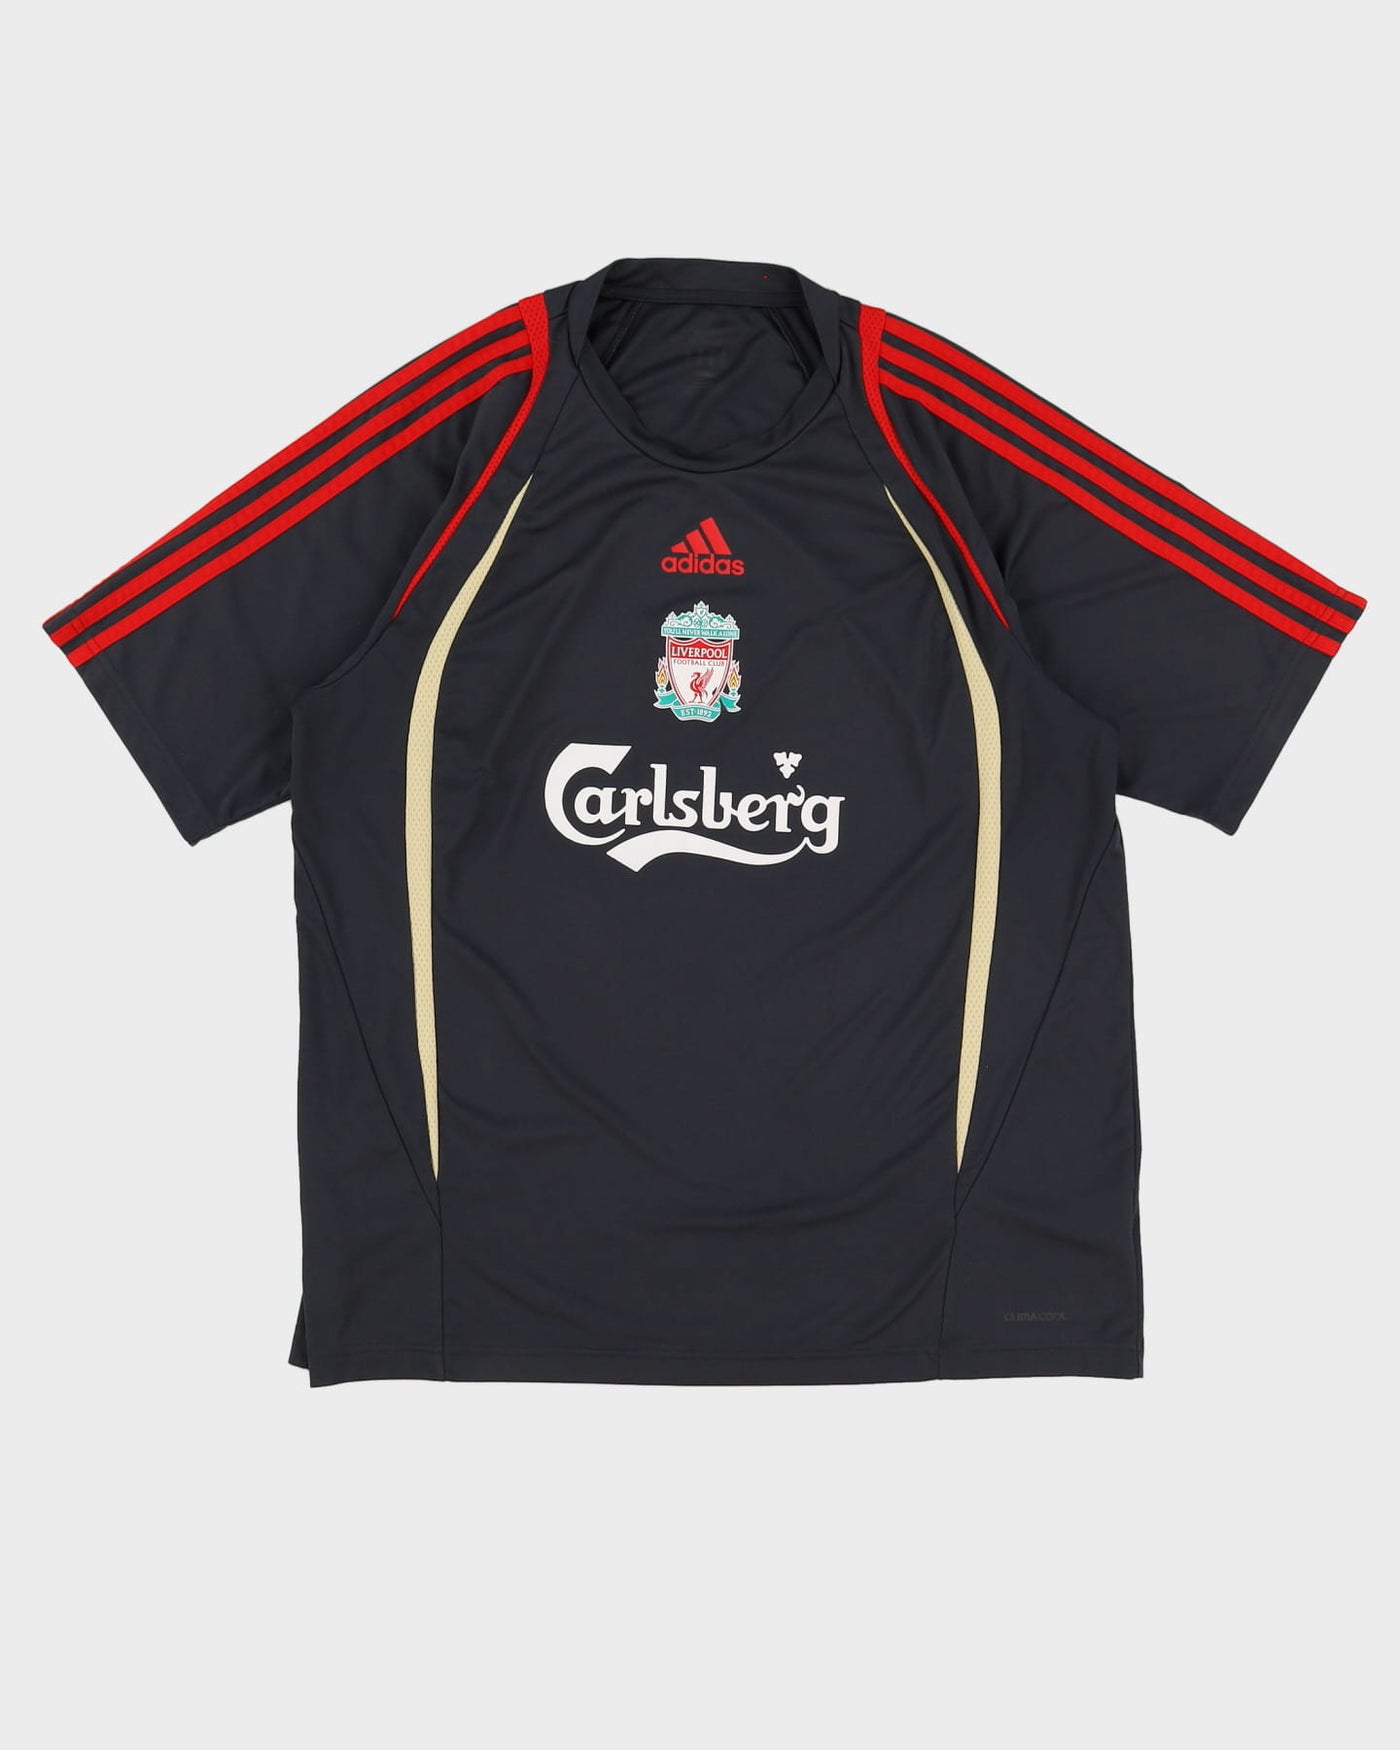 Liverpool FC Adidas Grey Football Training Shirt / Jersey - XL